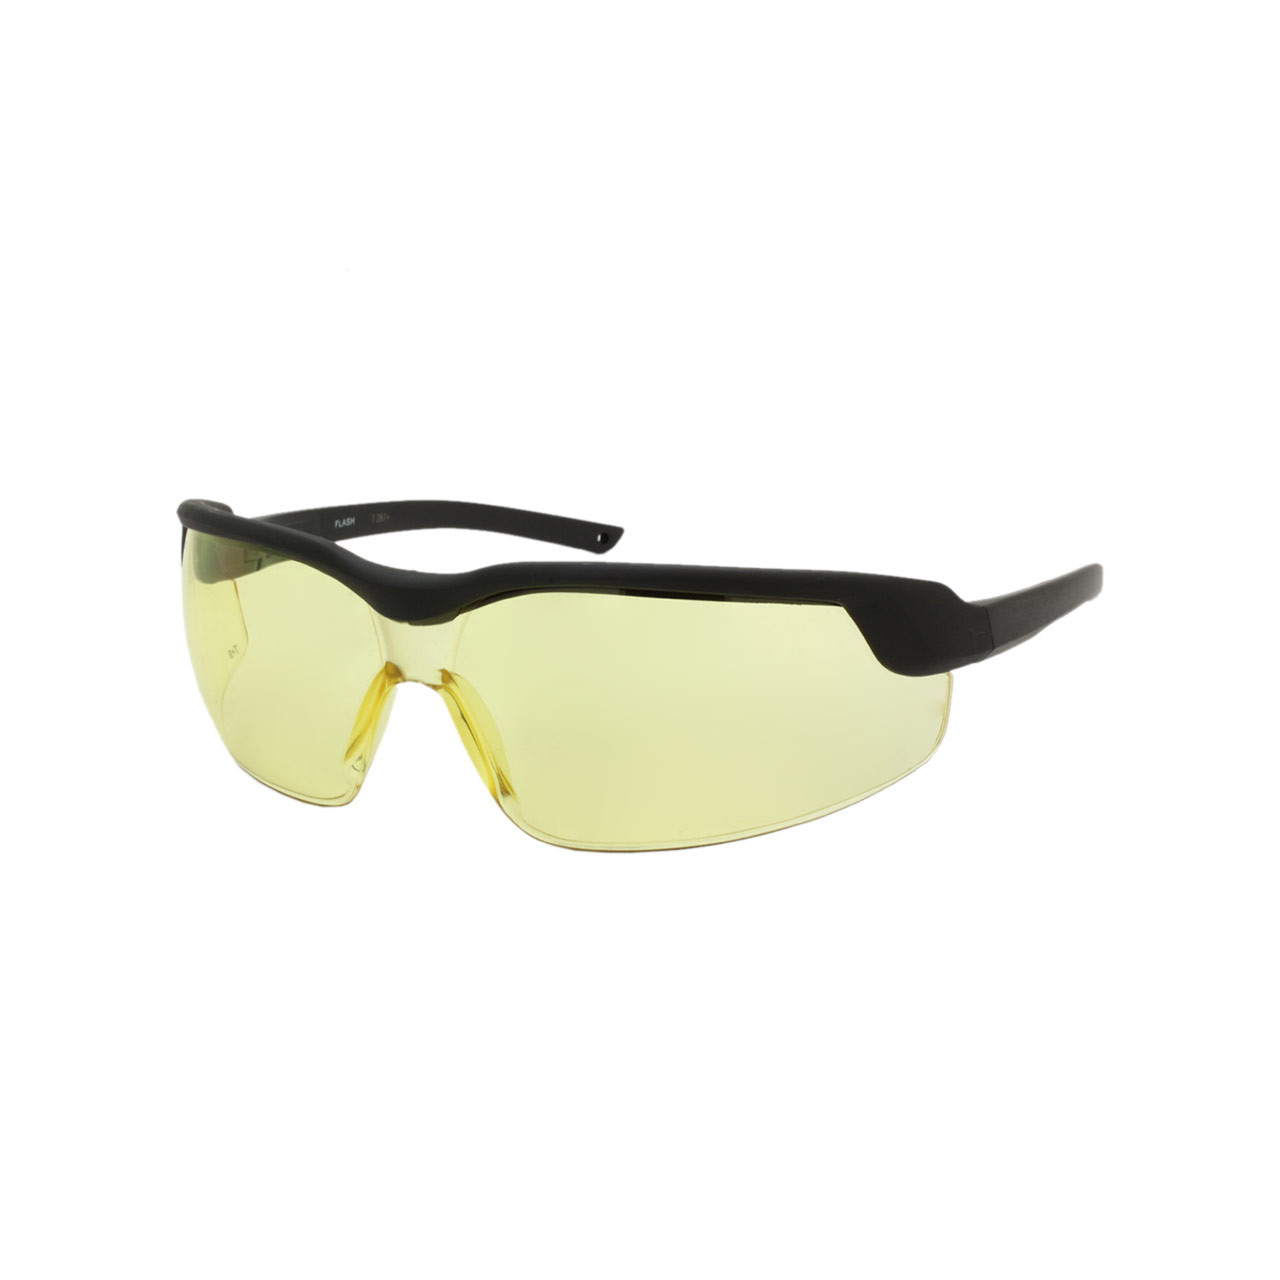 THUNDER FOAMBACK MENS WRAP SAFETY SUNGLASSES ASSTD. 10 PCS  TH6001-003 -  Shark Eyes, Inc. - Wholesale Sunglasses, Reading Glasses, & Displays